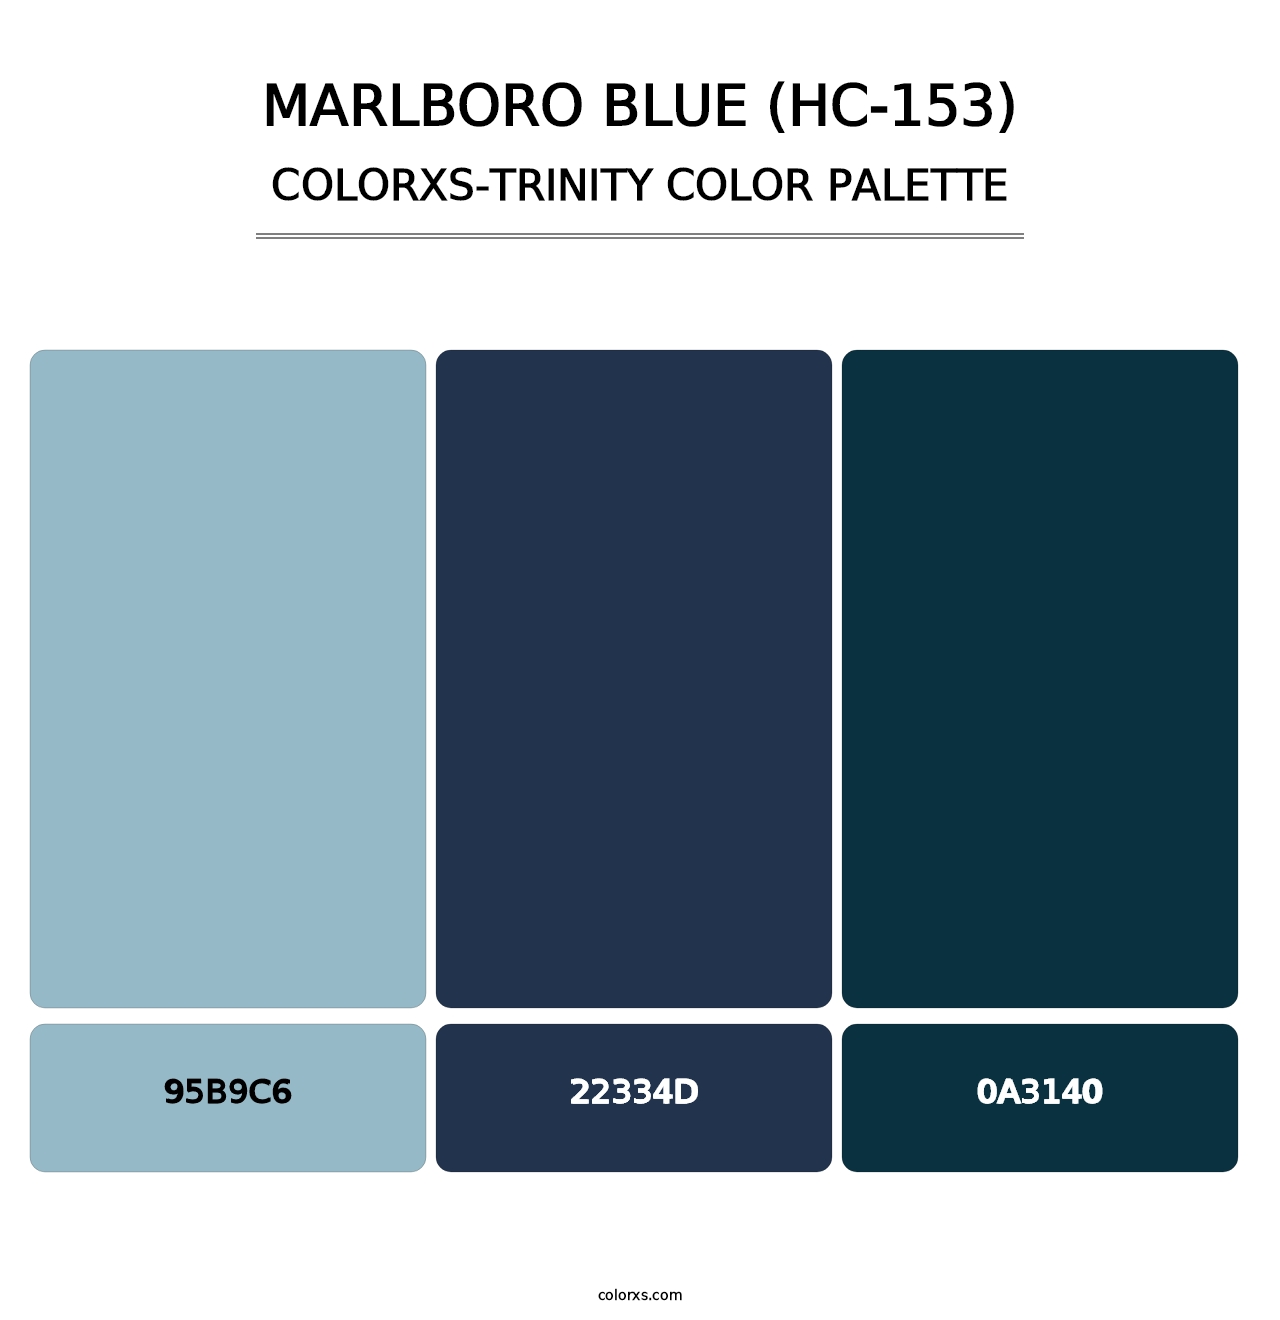 Marlboro Blue (HC-153) - Colorxs Trinity Palette